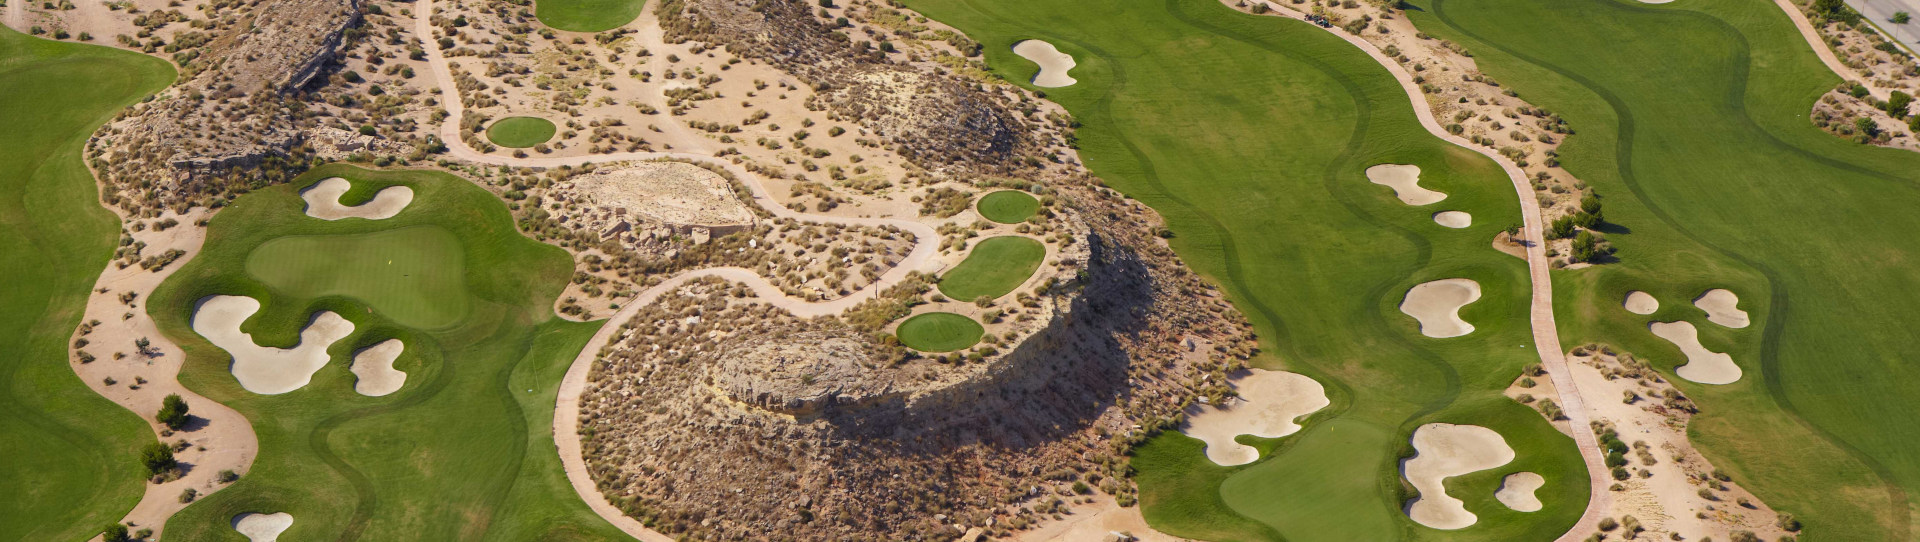 Spain golf courses - El Valle Golf Course - Photo 1